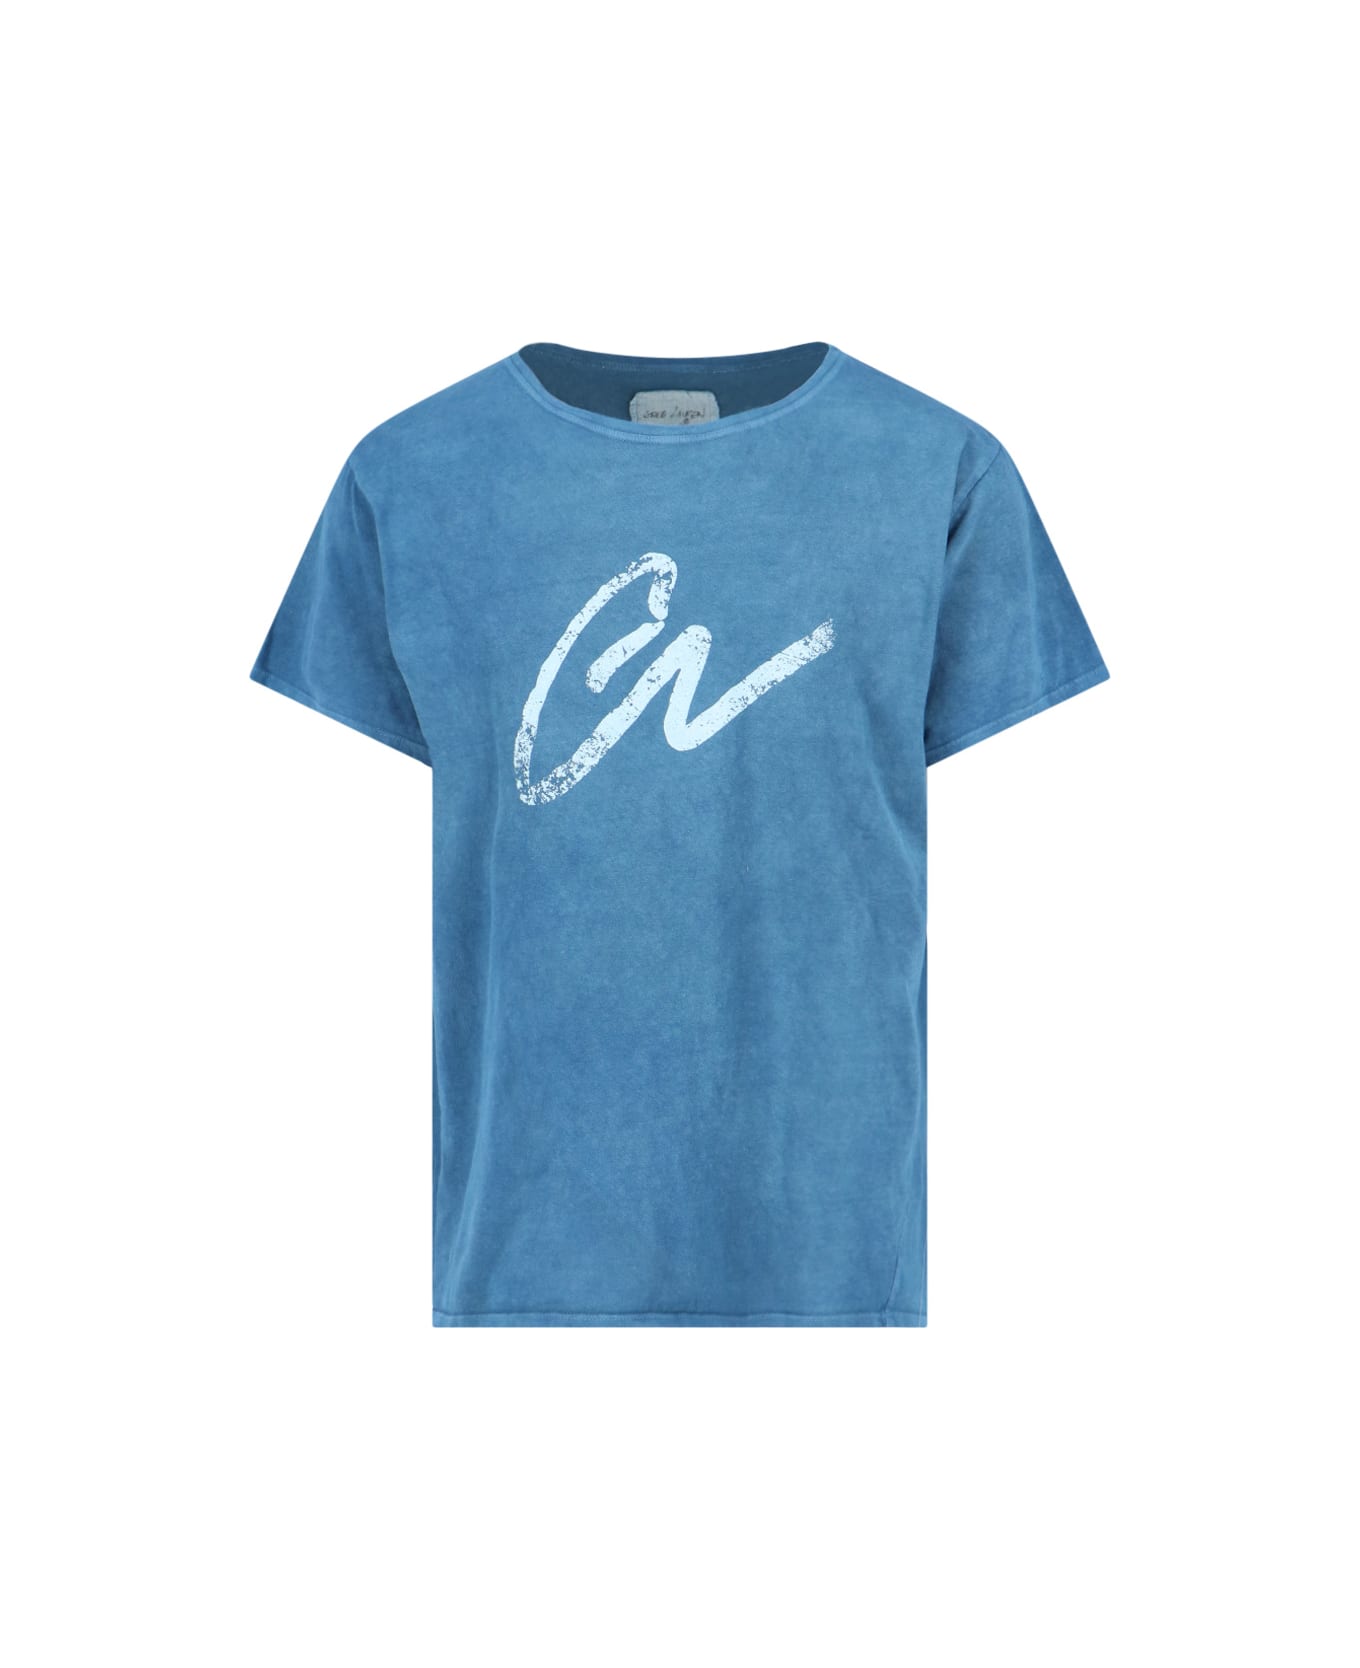 Greg Lauren 'gl' Print T-shirt - Light Blue シャツ